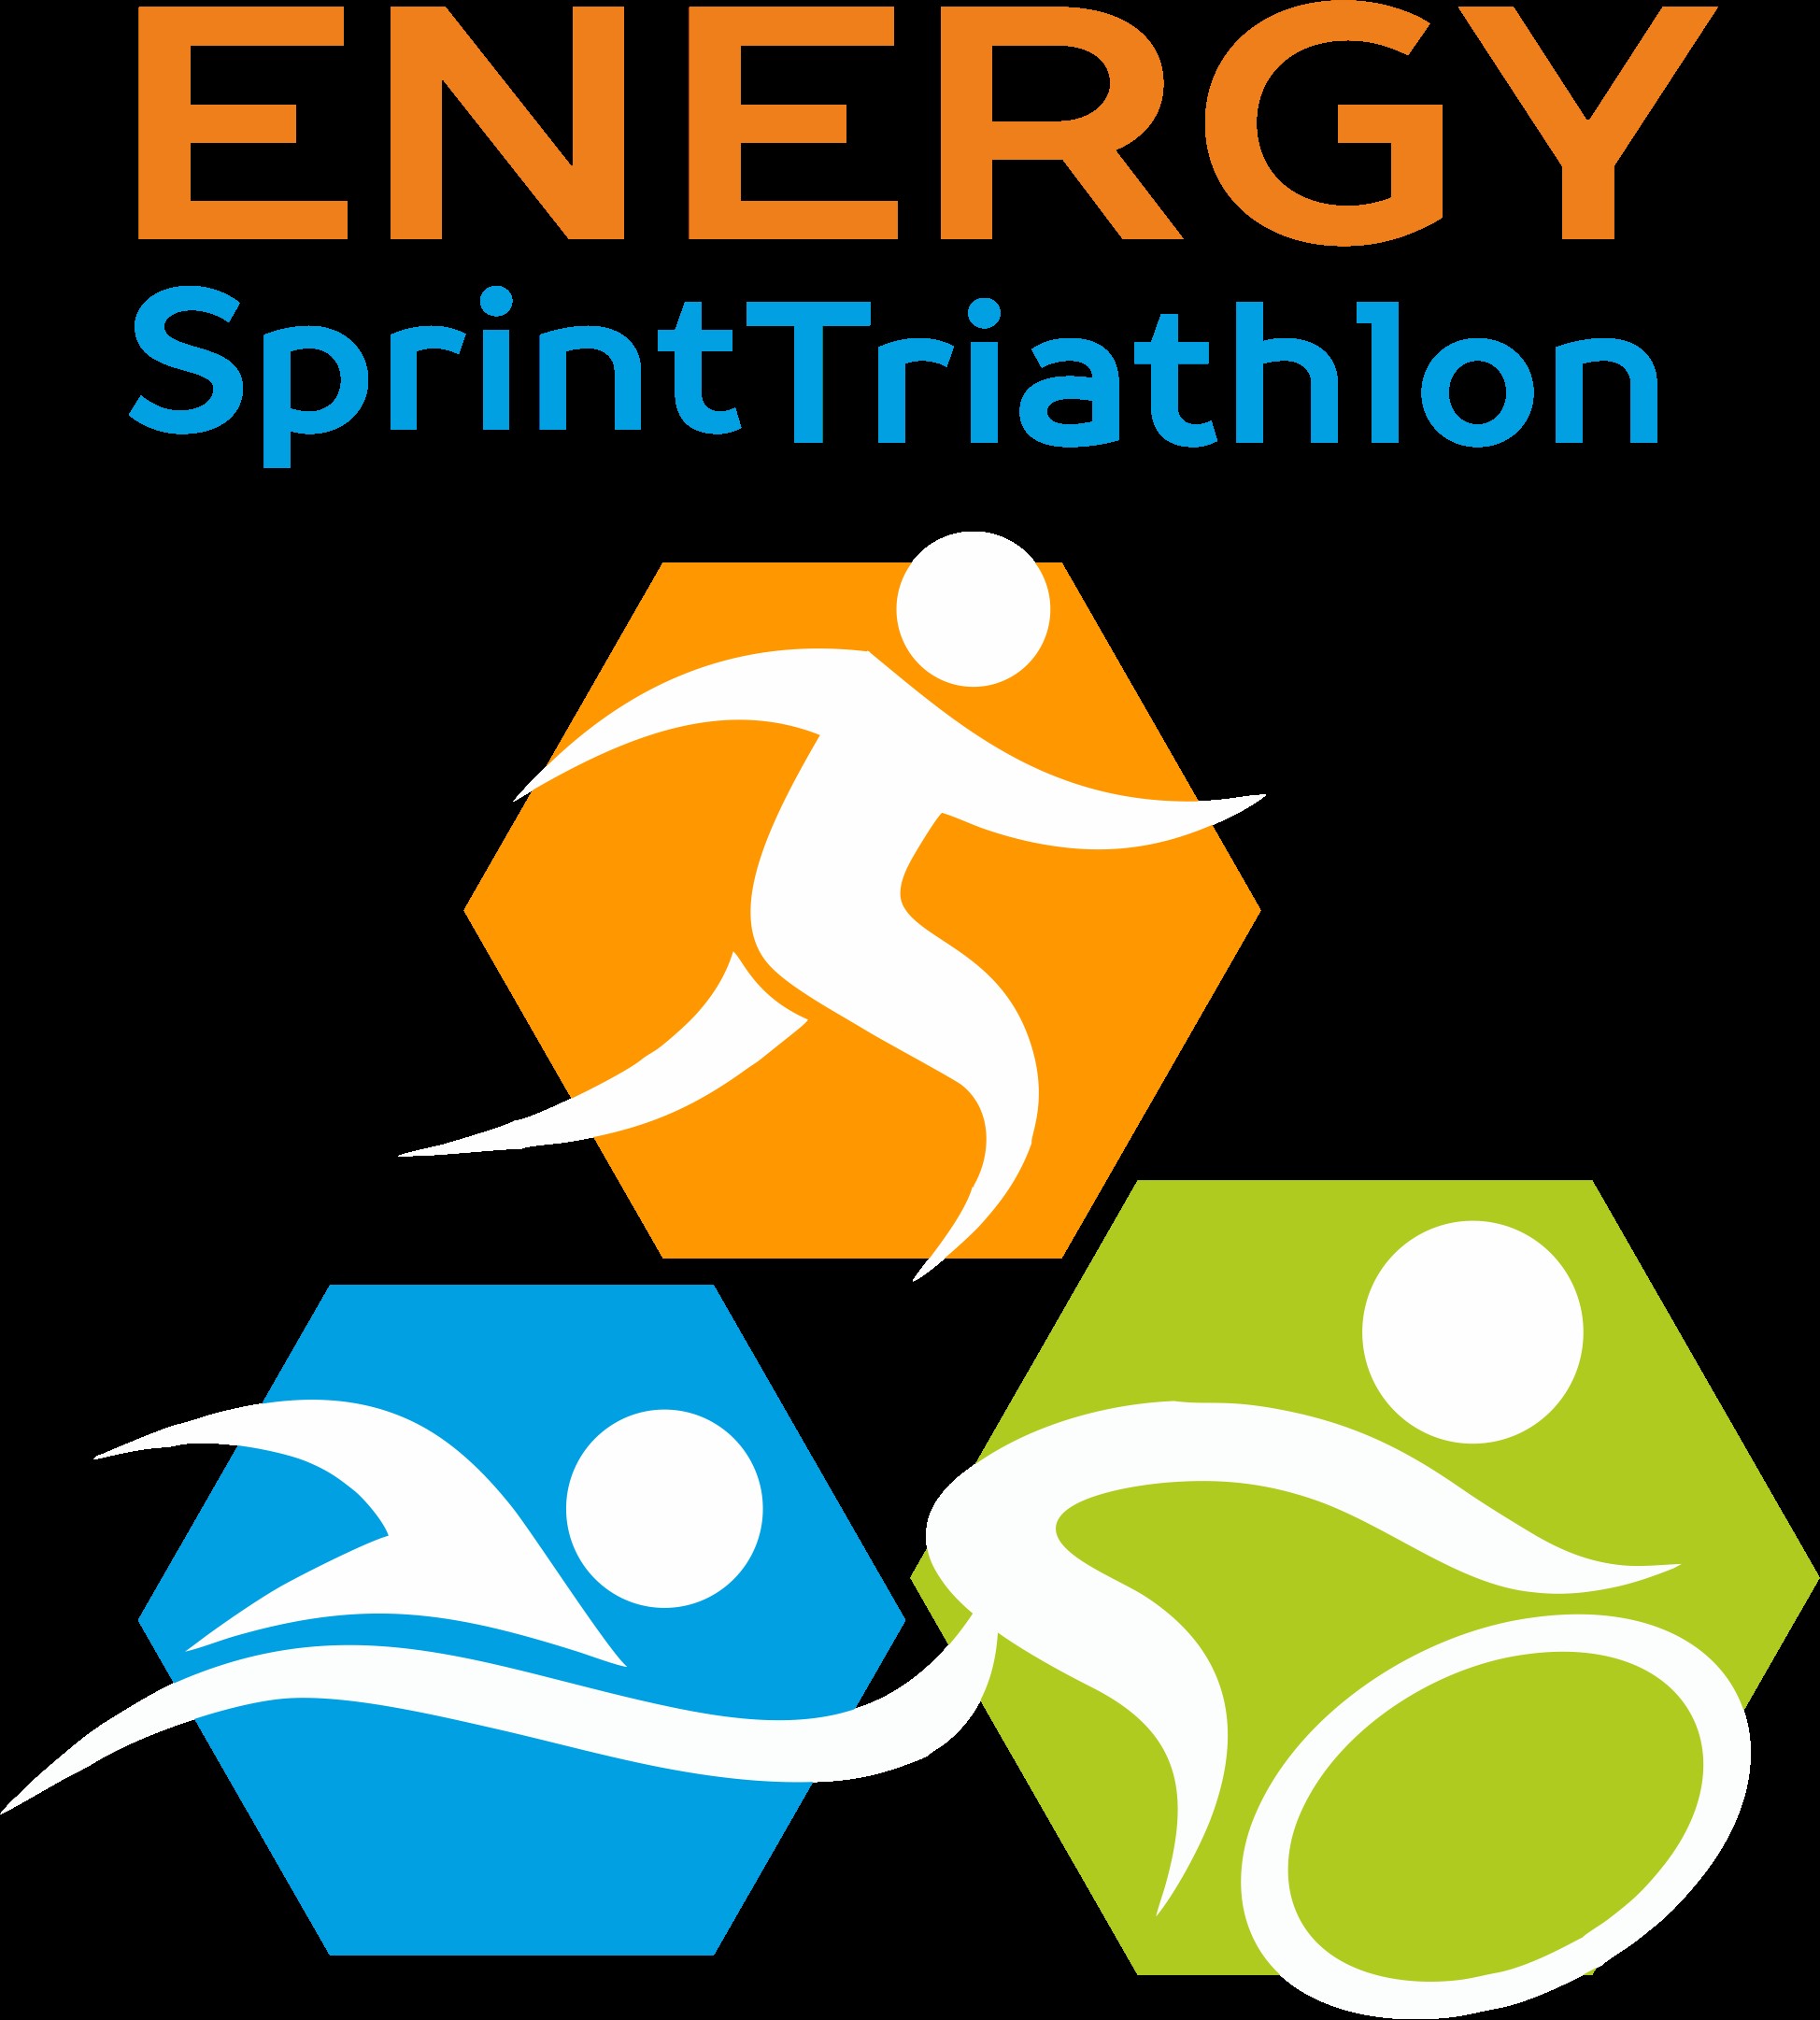 Energy Sprint Triathlon